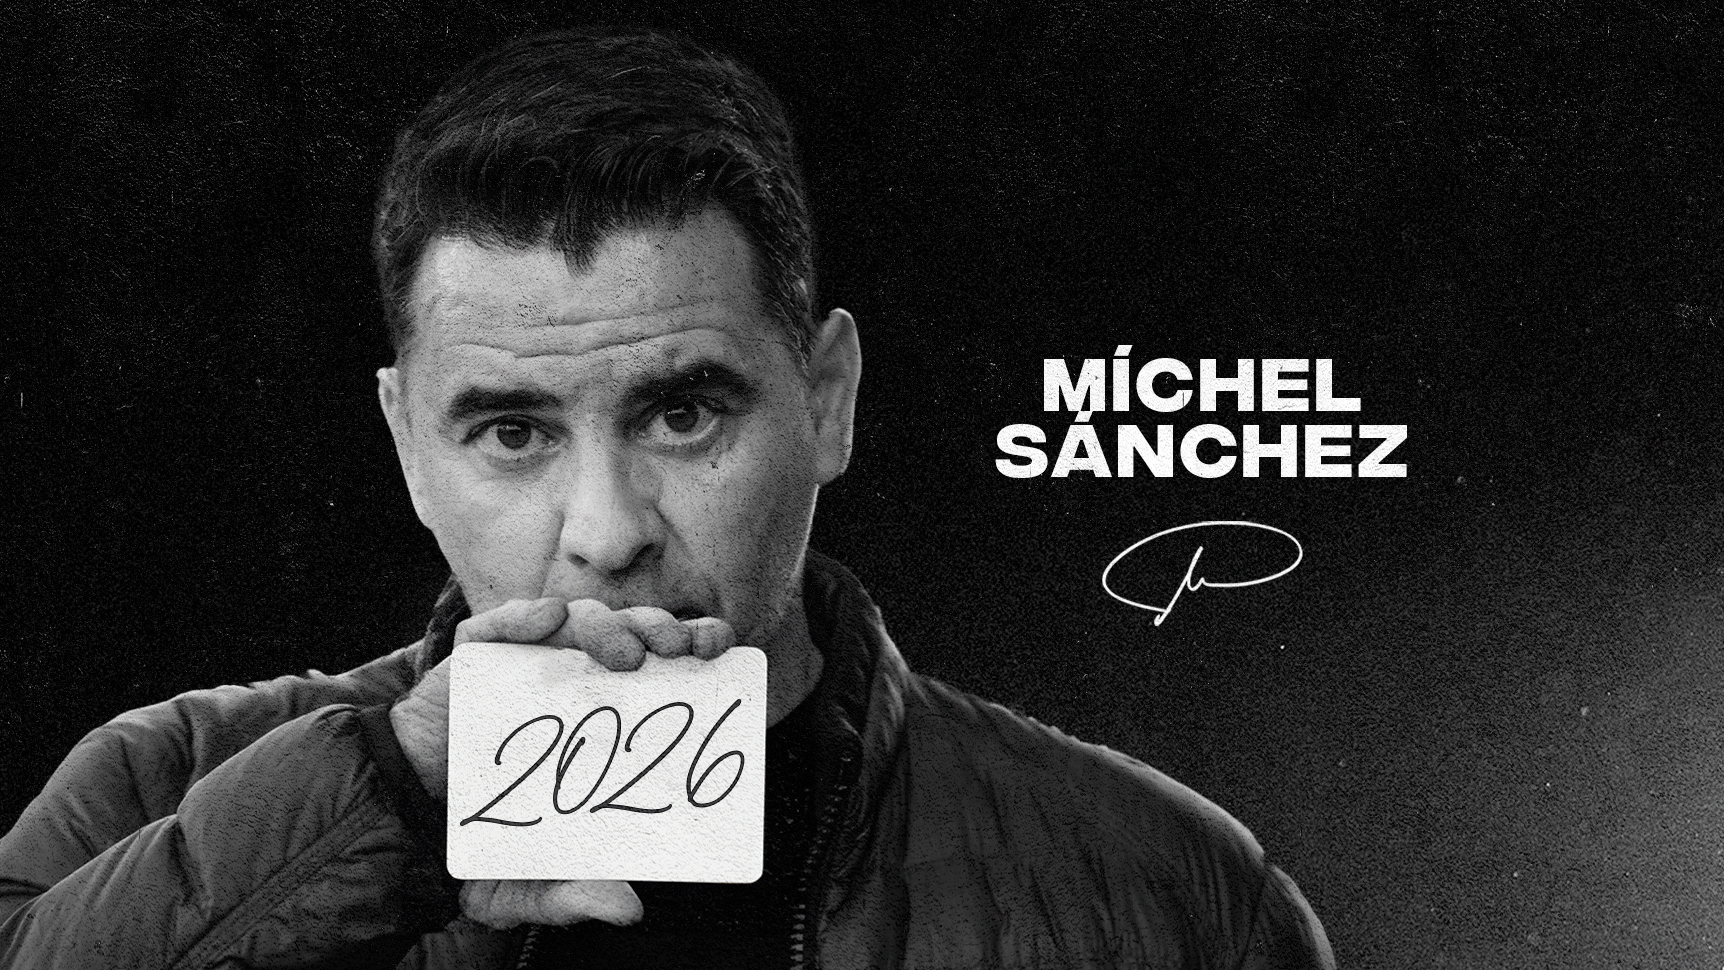 Michel renewed until 2026